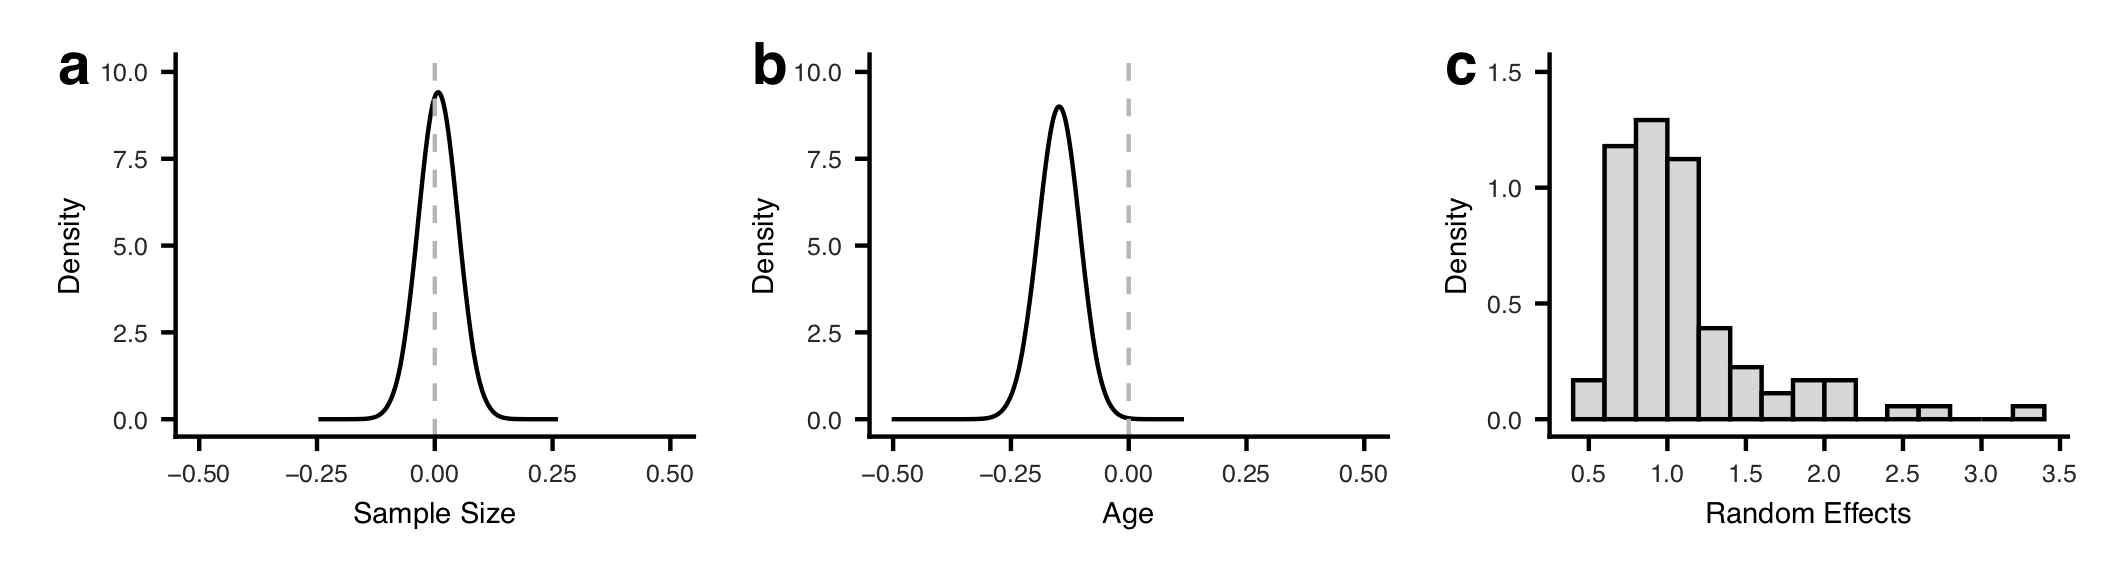 (a, b) 피험자 수와 나이가 작업기억과 관련된 뇌 활성화에 미치는 영향의 사후확률분포를 나타내었다. 피험자 수는 영향이 없지만, 나이가 적을수록 뇌 활성화 정도가 더 크다는 것을 알 수 있다. (c) 데이터 세트에 포함된 연구들의 활성화 차이를 보정하기 위해 넣은 무선효과들의 히스토그램. 원본 연구의 경향성을 그대로 재현했다